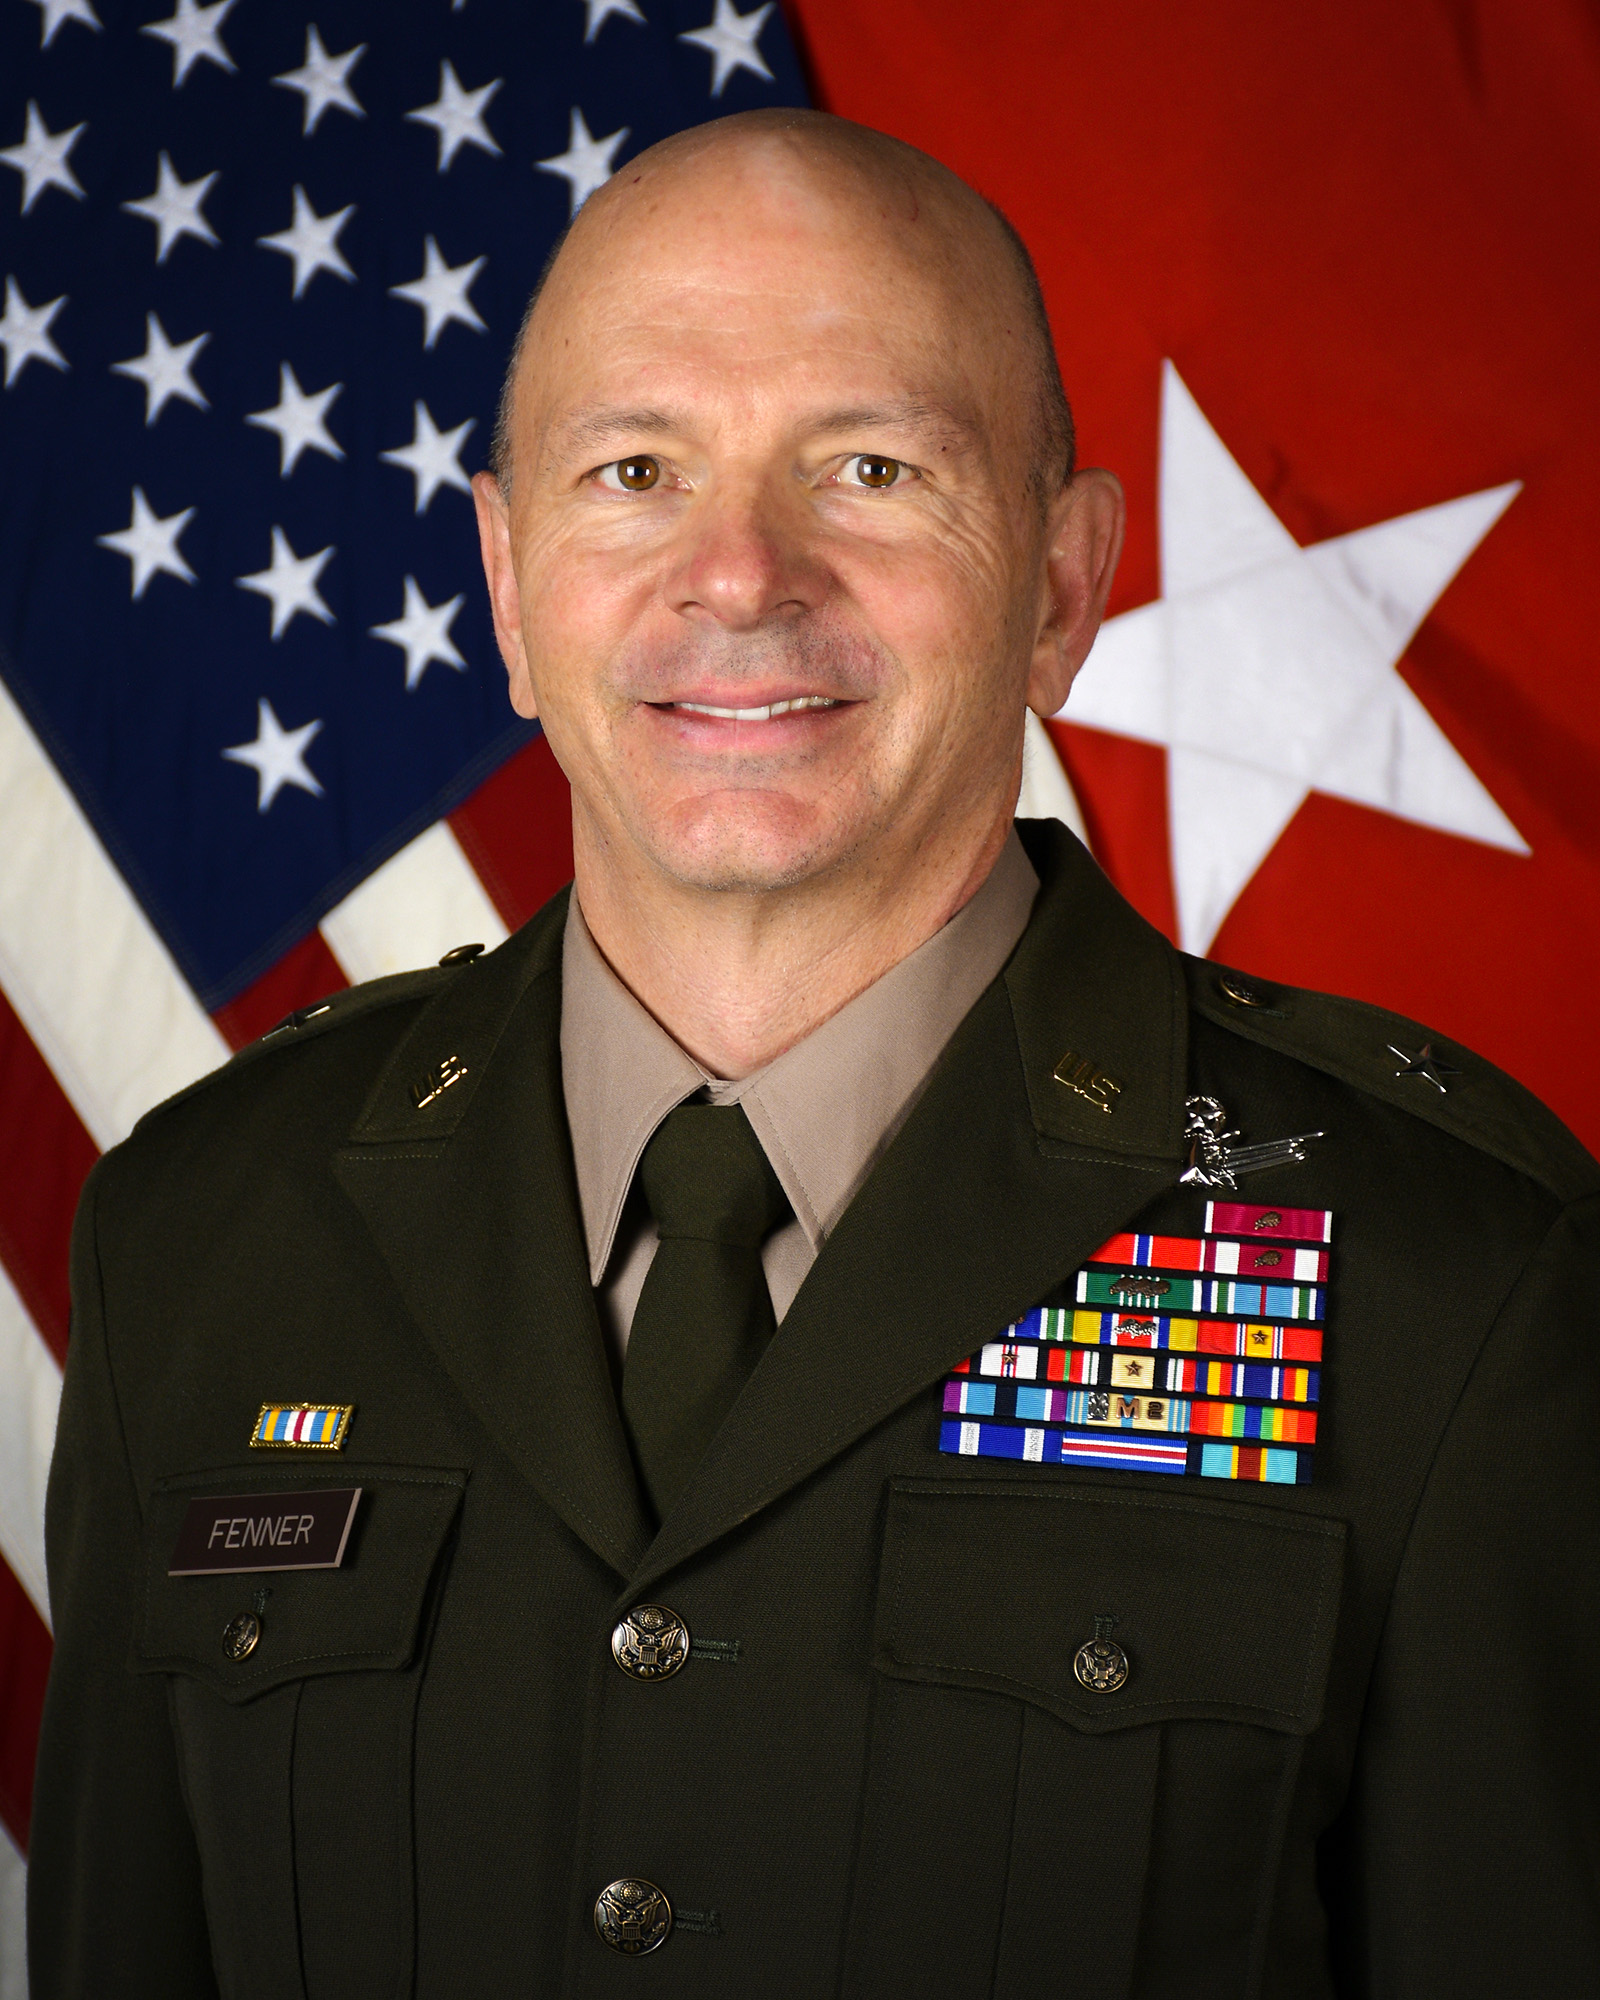 Brigadier General Tod Fenner, Land Component Commander